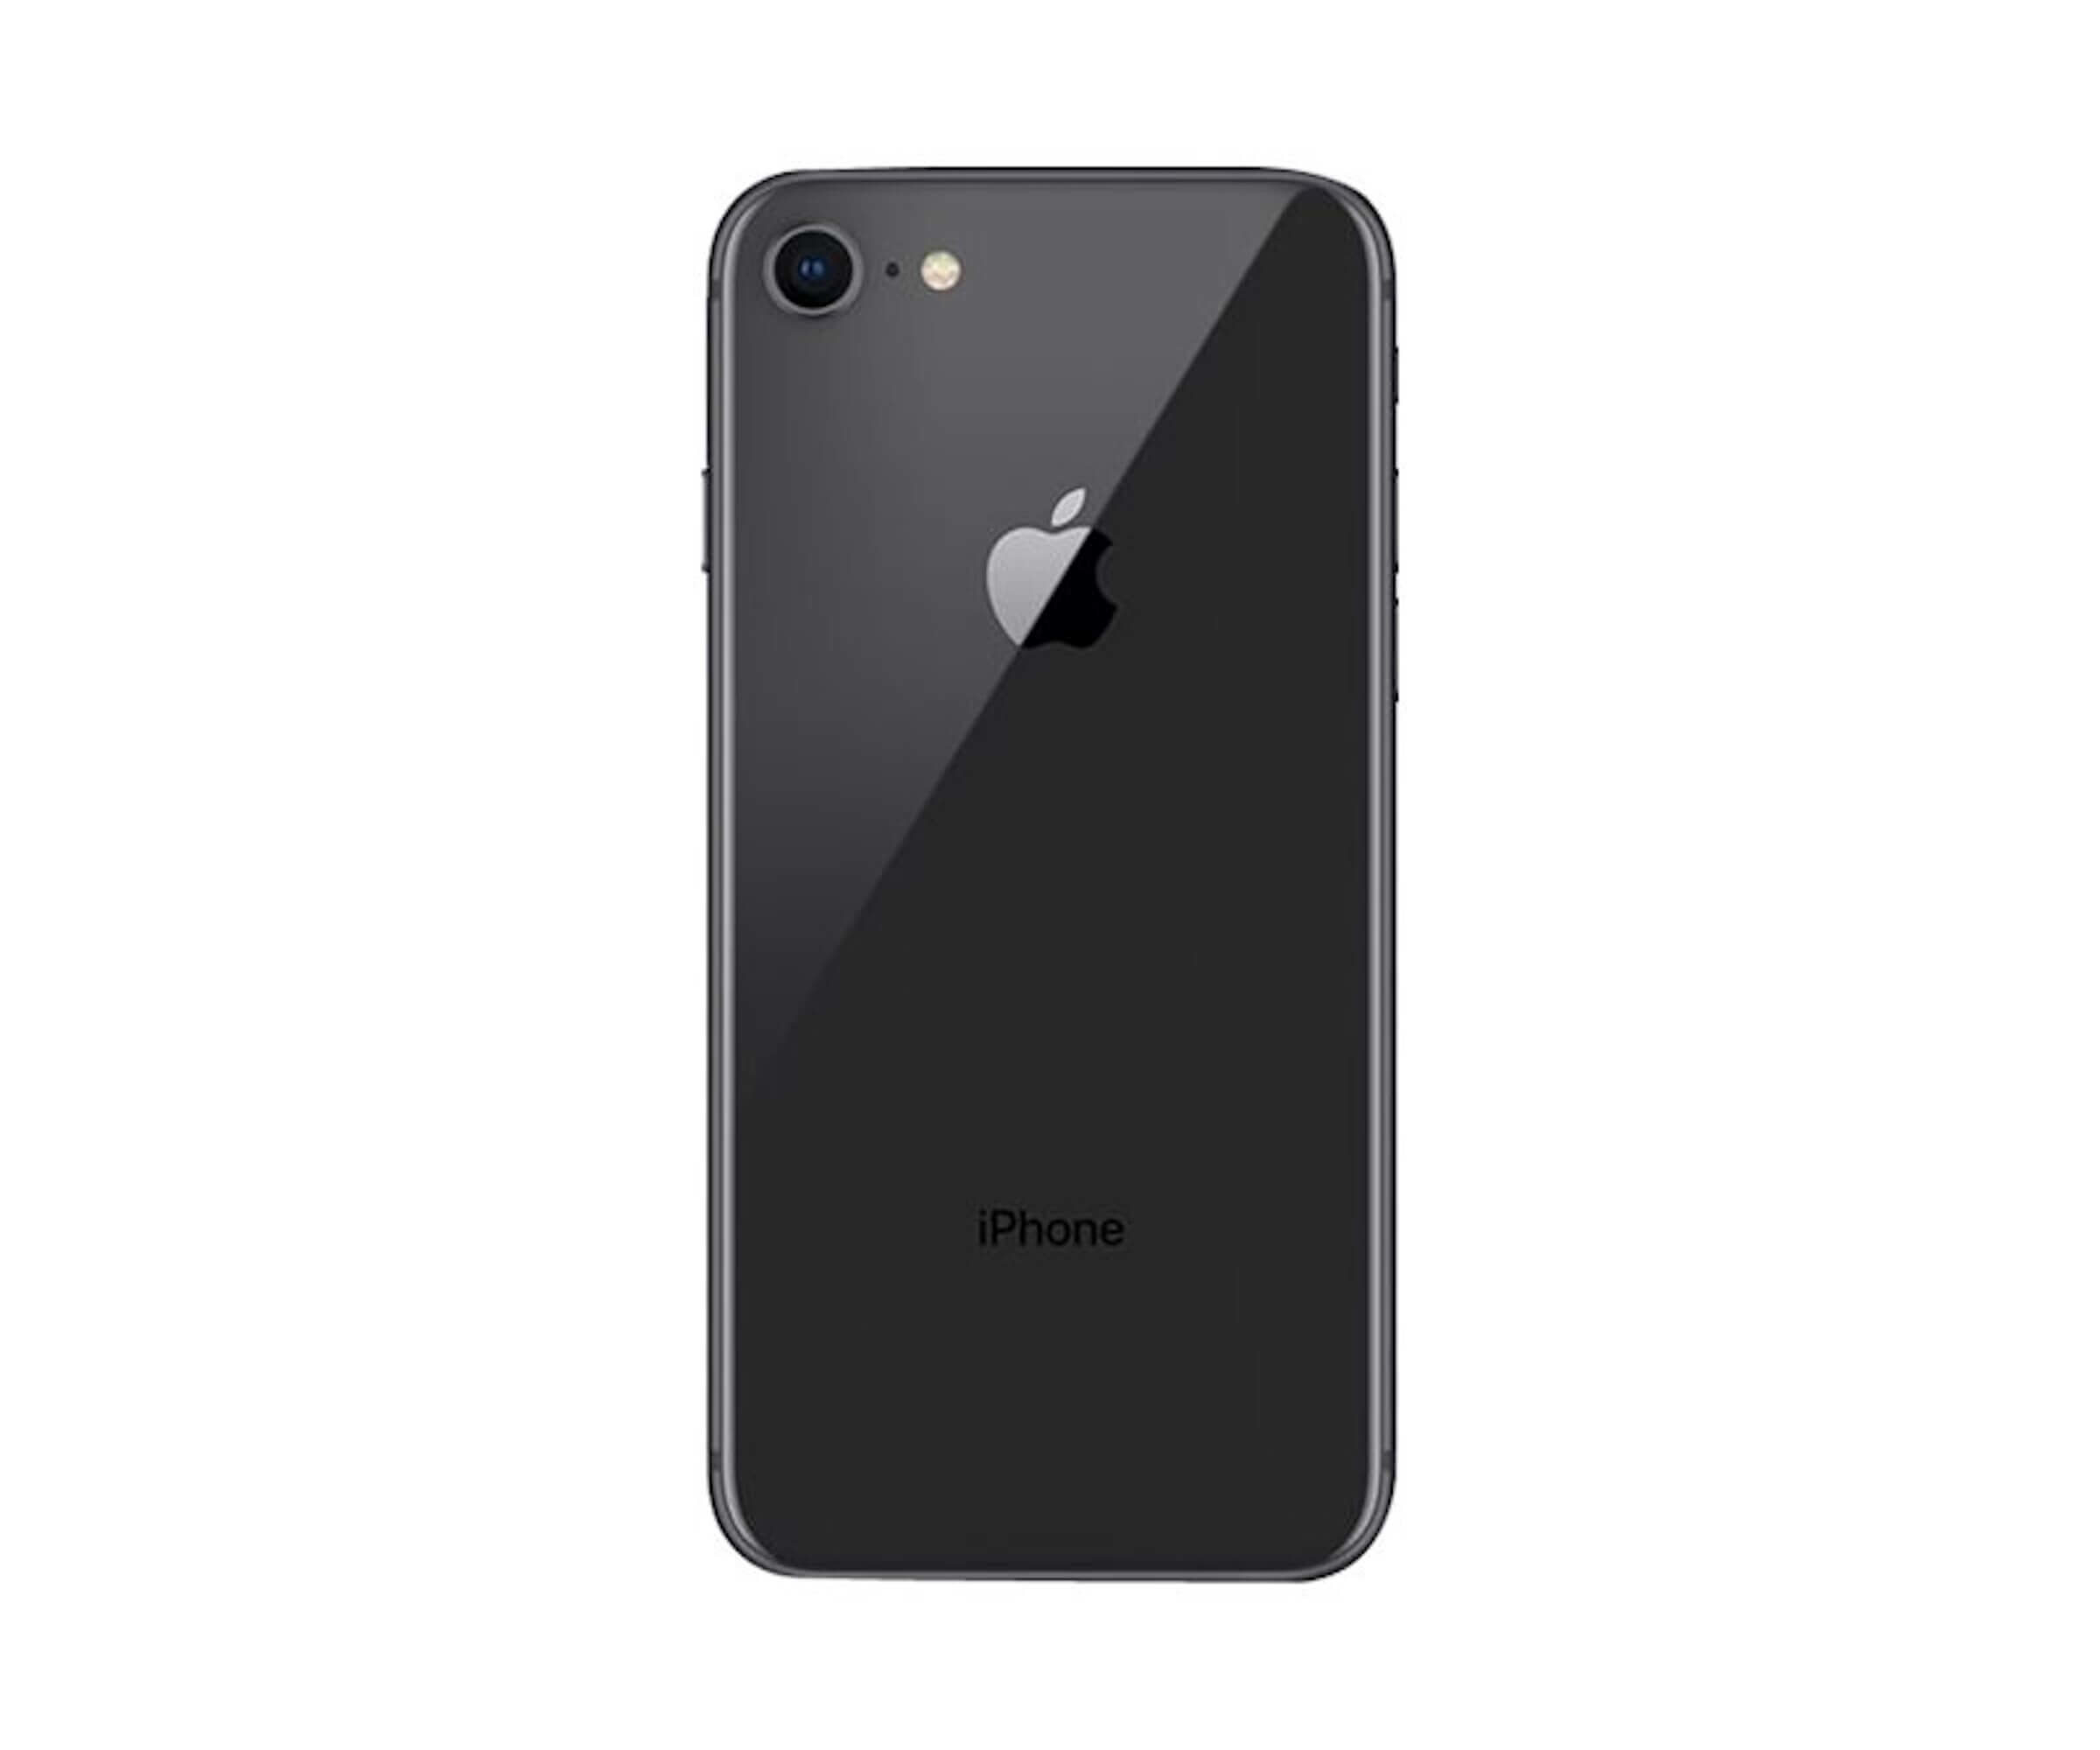 Apple iPhone 8 - Smartphone - 4G LTE Advanced - 64 GB - GSM - 4.7